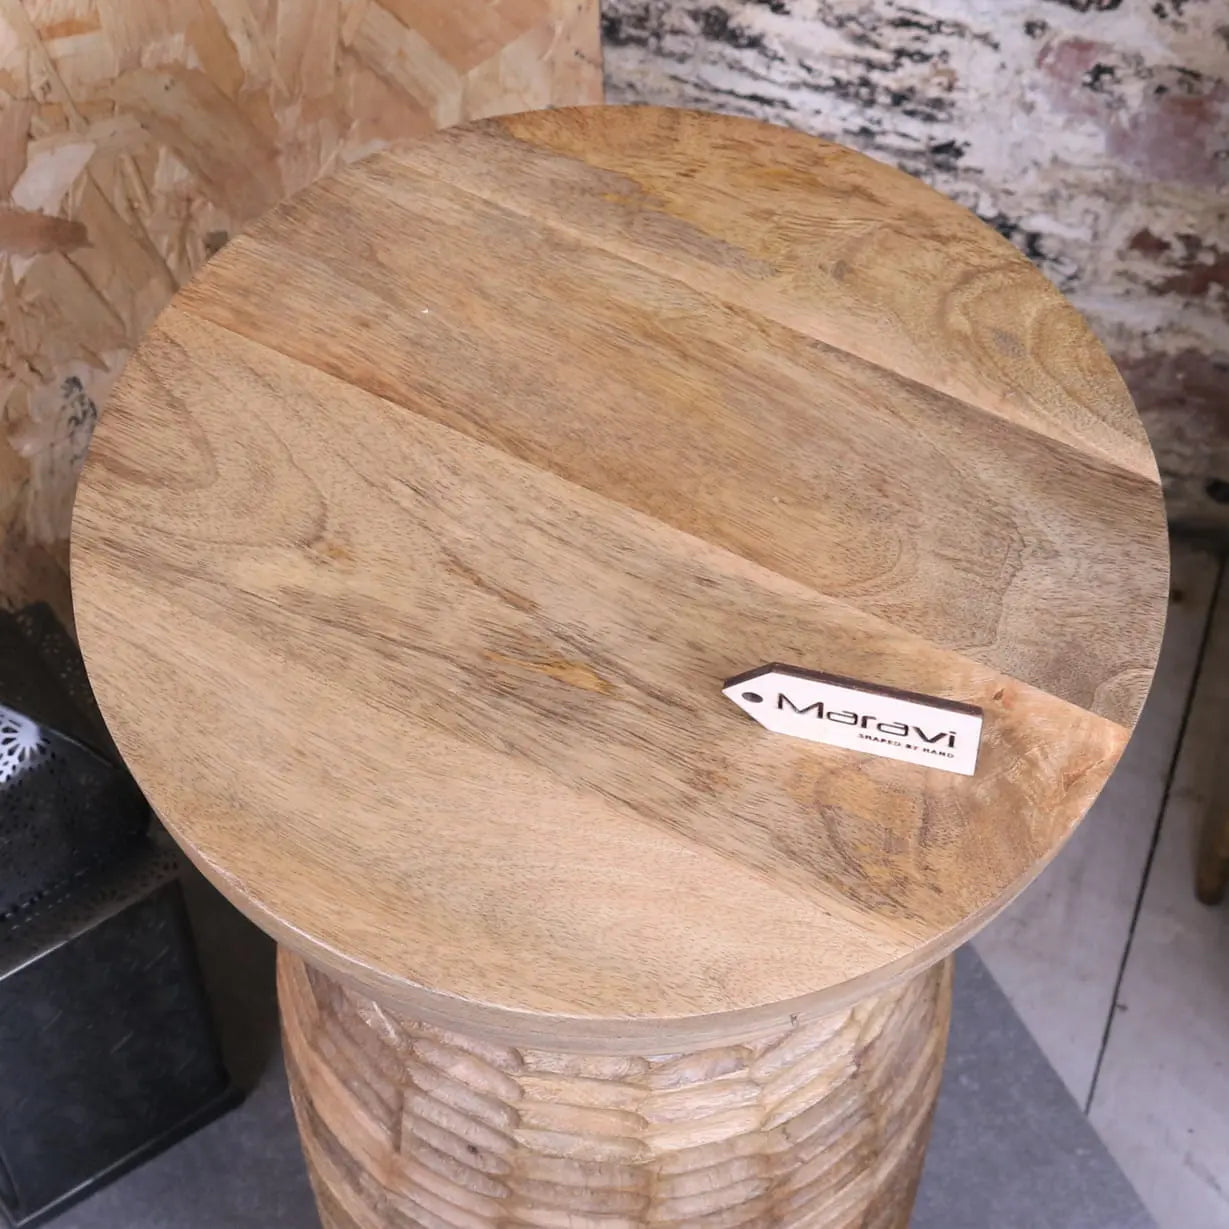 Reiek Wooden Carved Pedestal Side Table - Top View